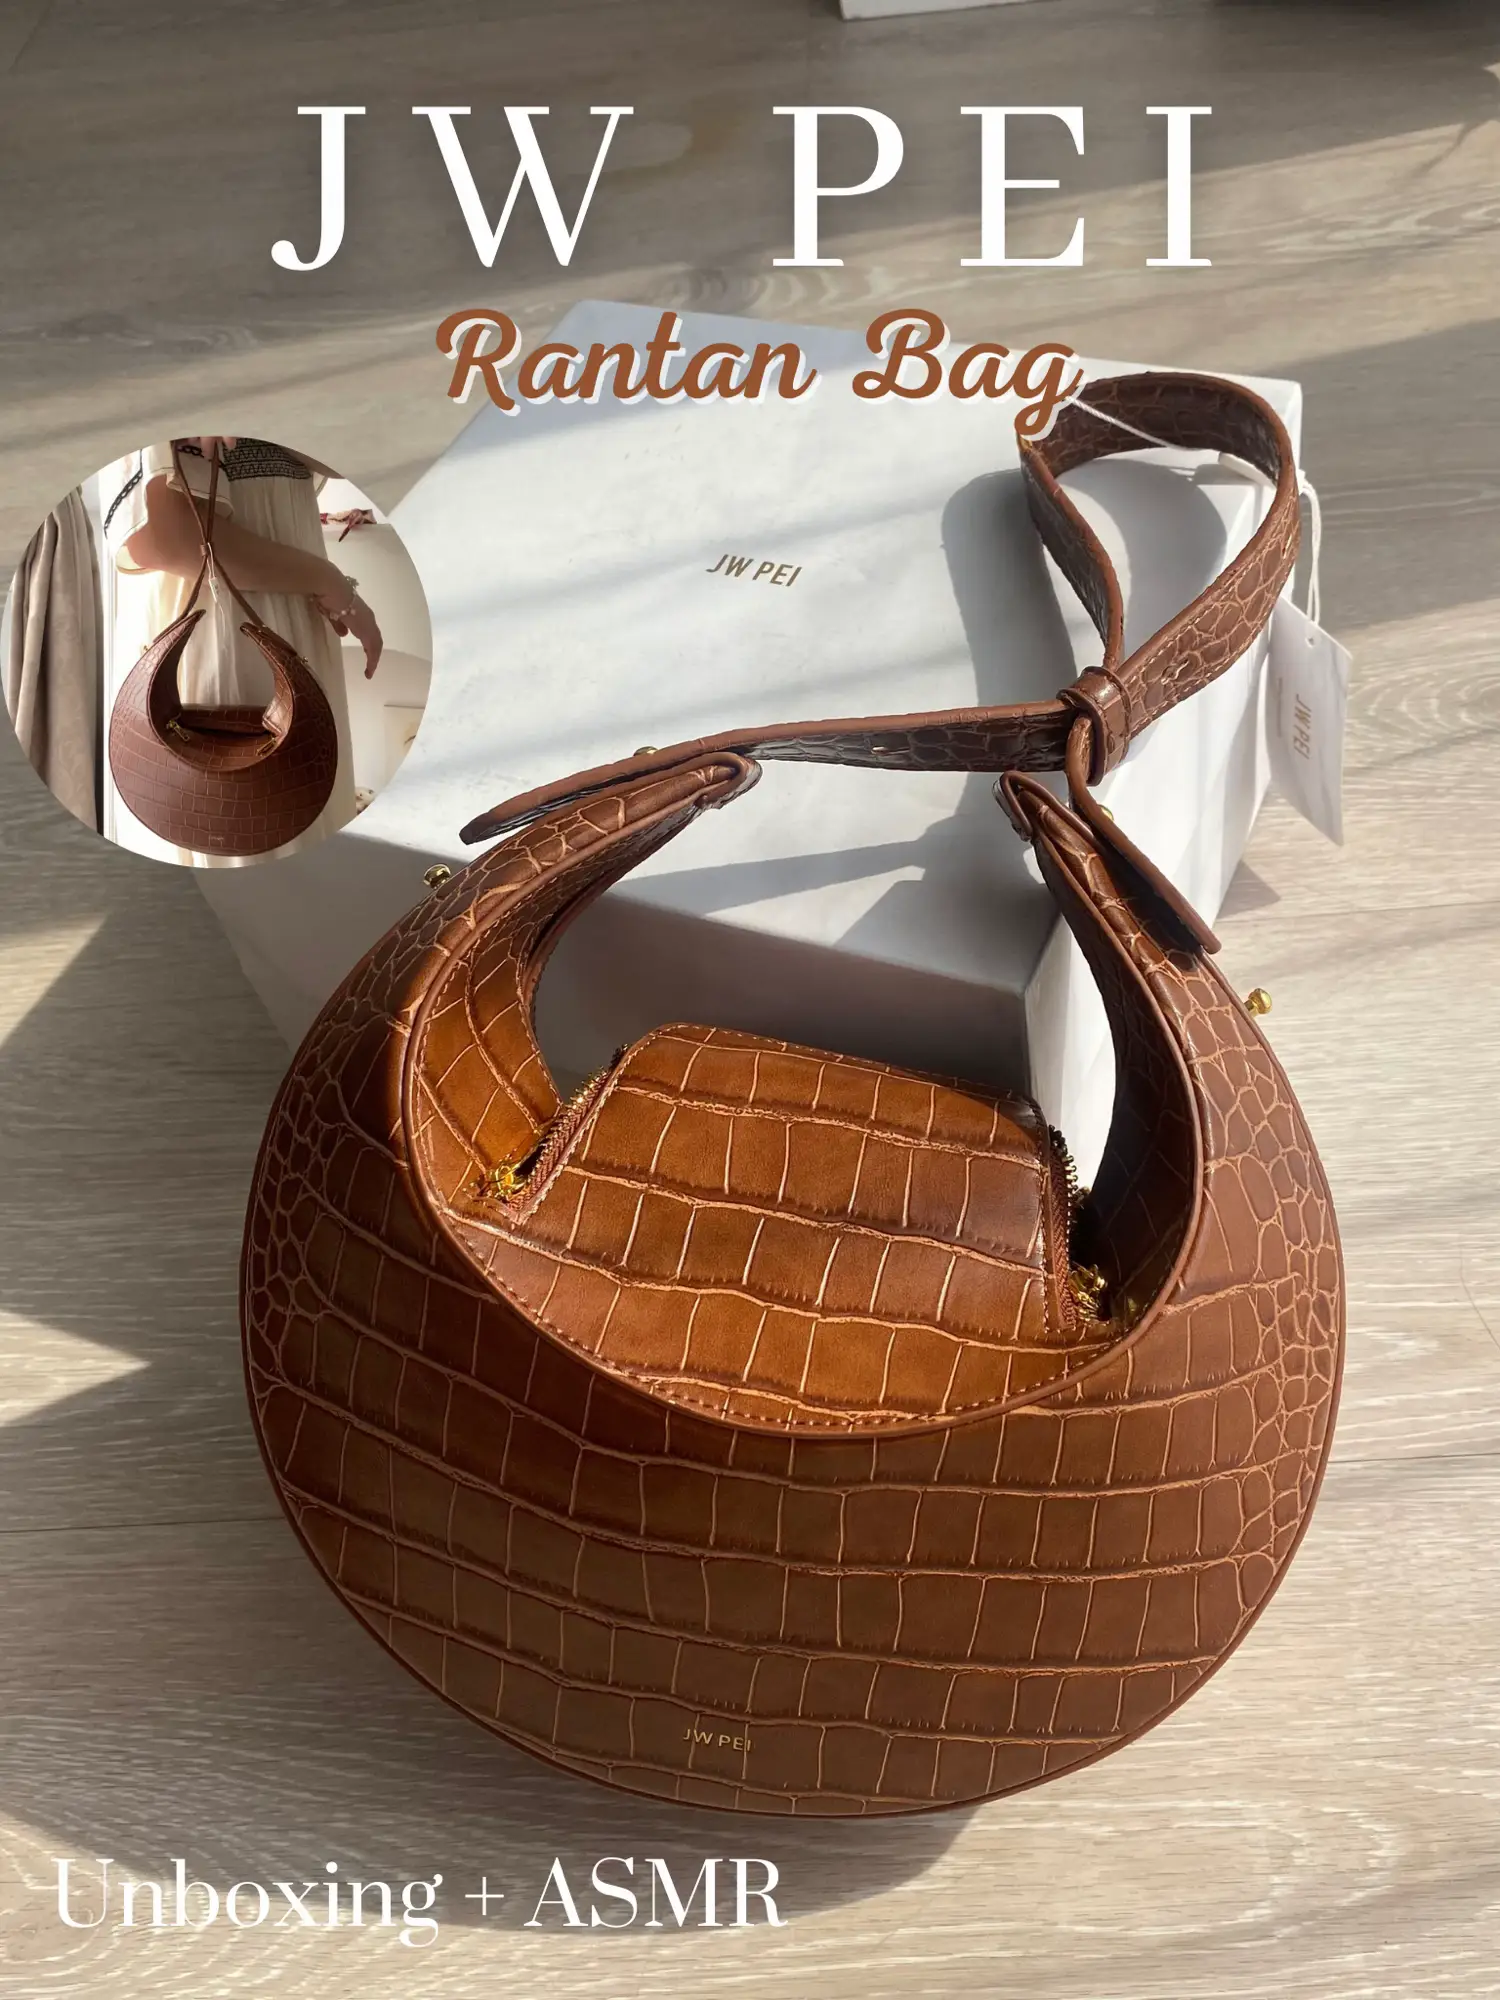 JW PEI Rantan Bag (Brown Croc), Brand new. Comes